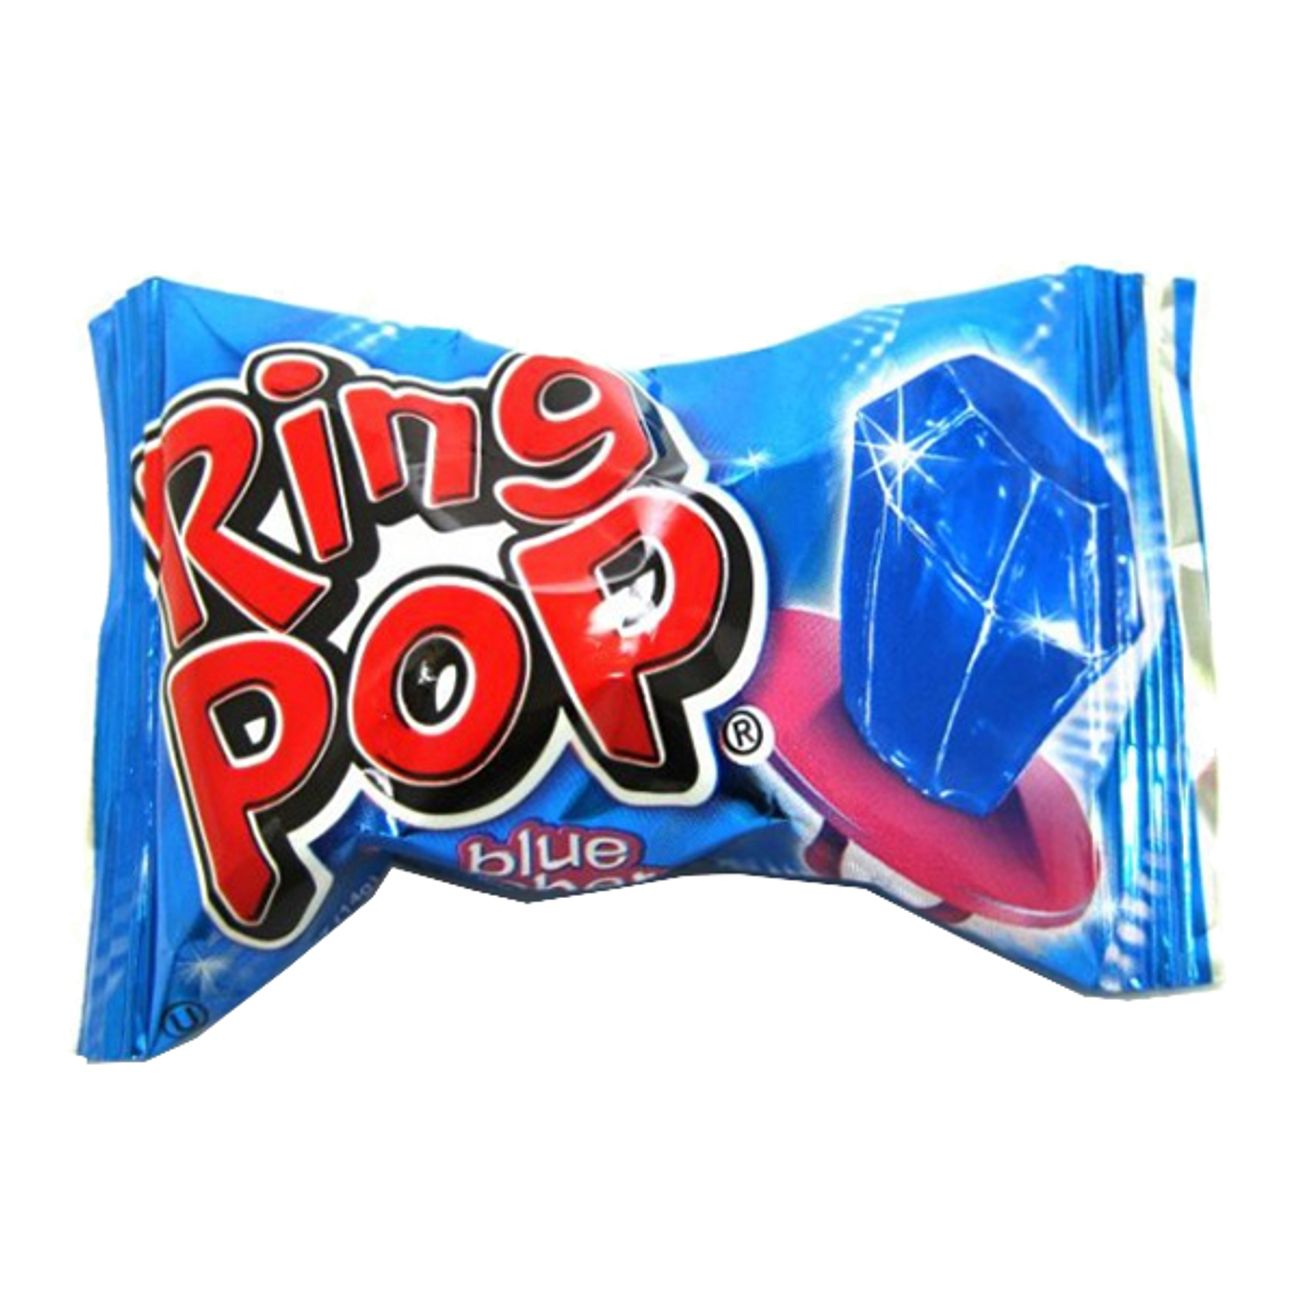 ring-pop-godisring-2